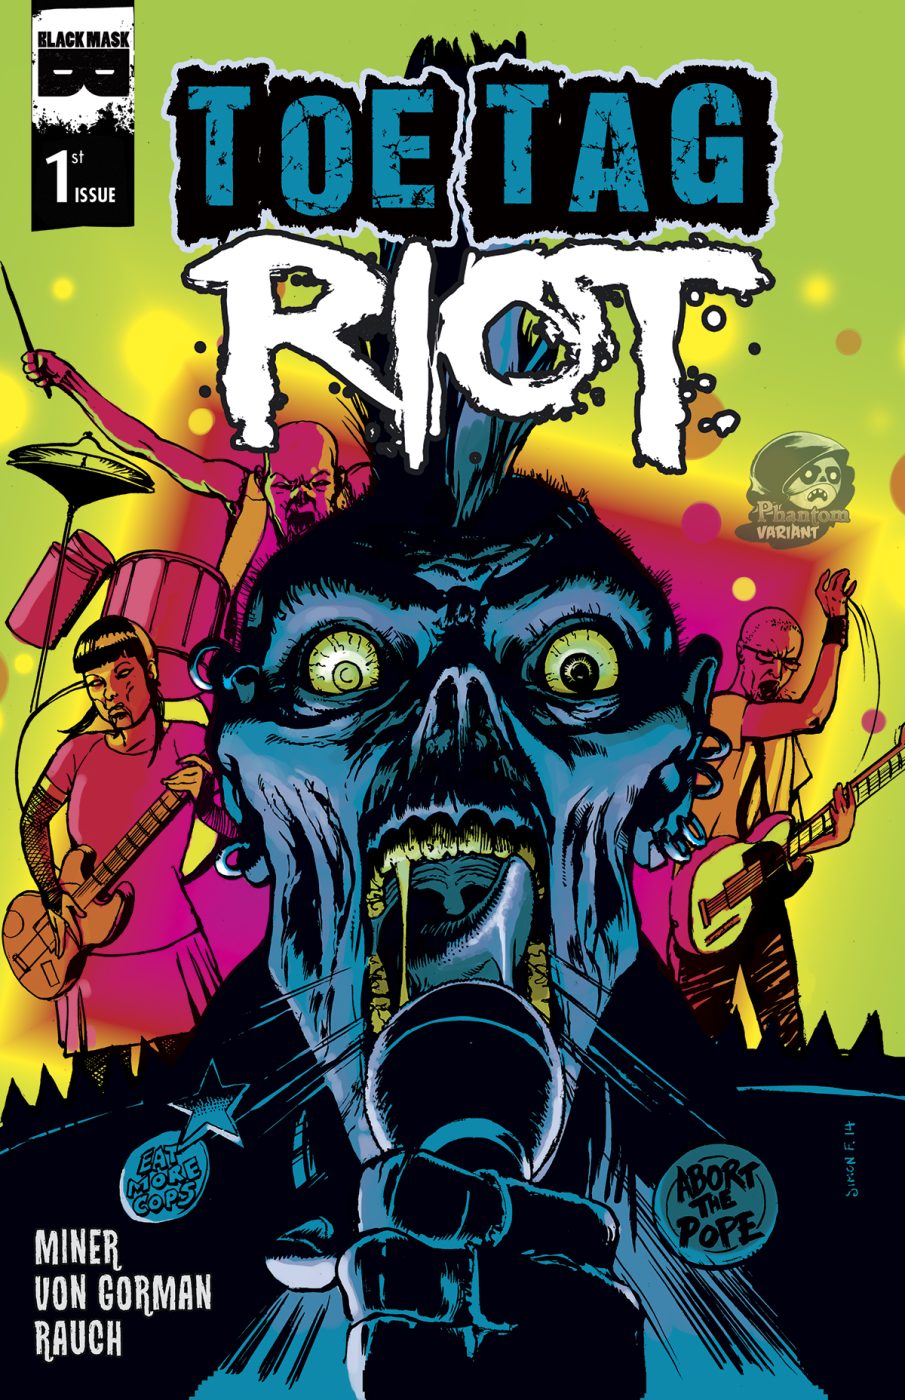 Toe Tag Riot #1 (Phantom Variant)